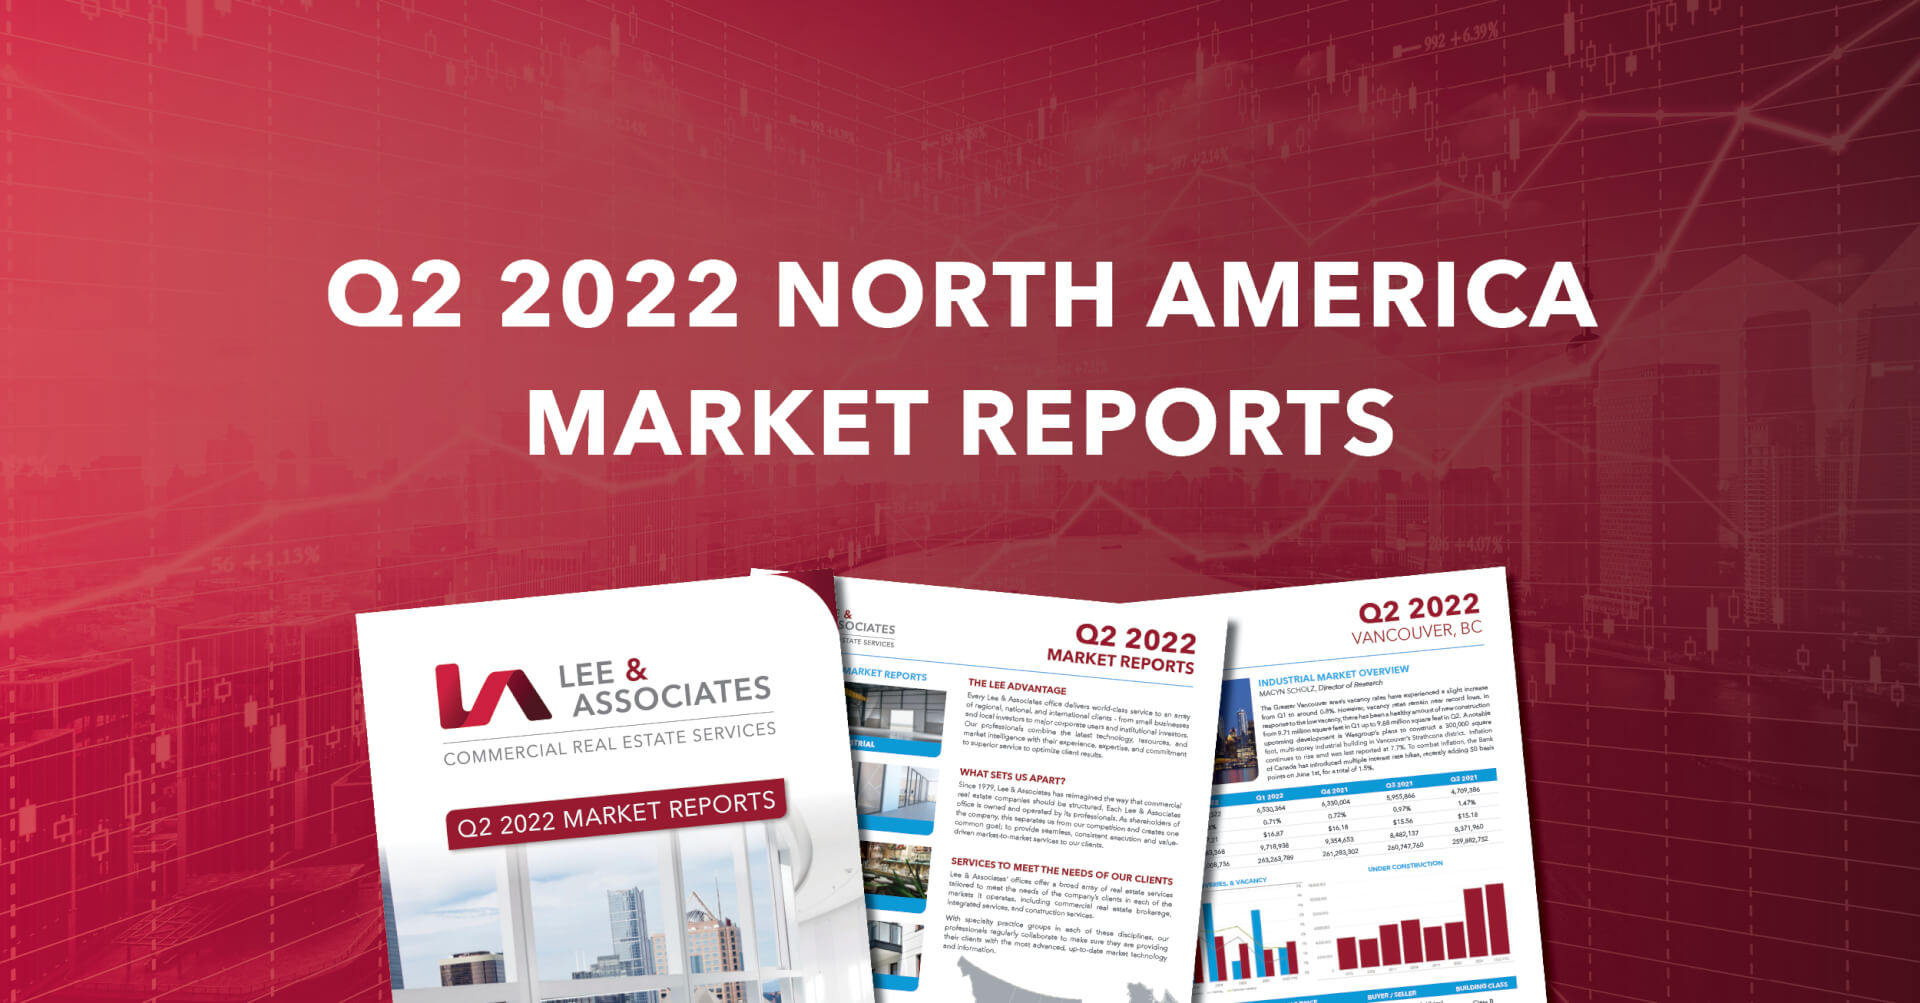 Q2 2022 North America Market Reports Released